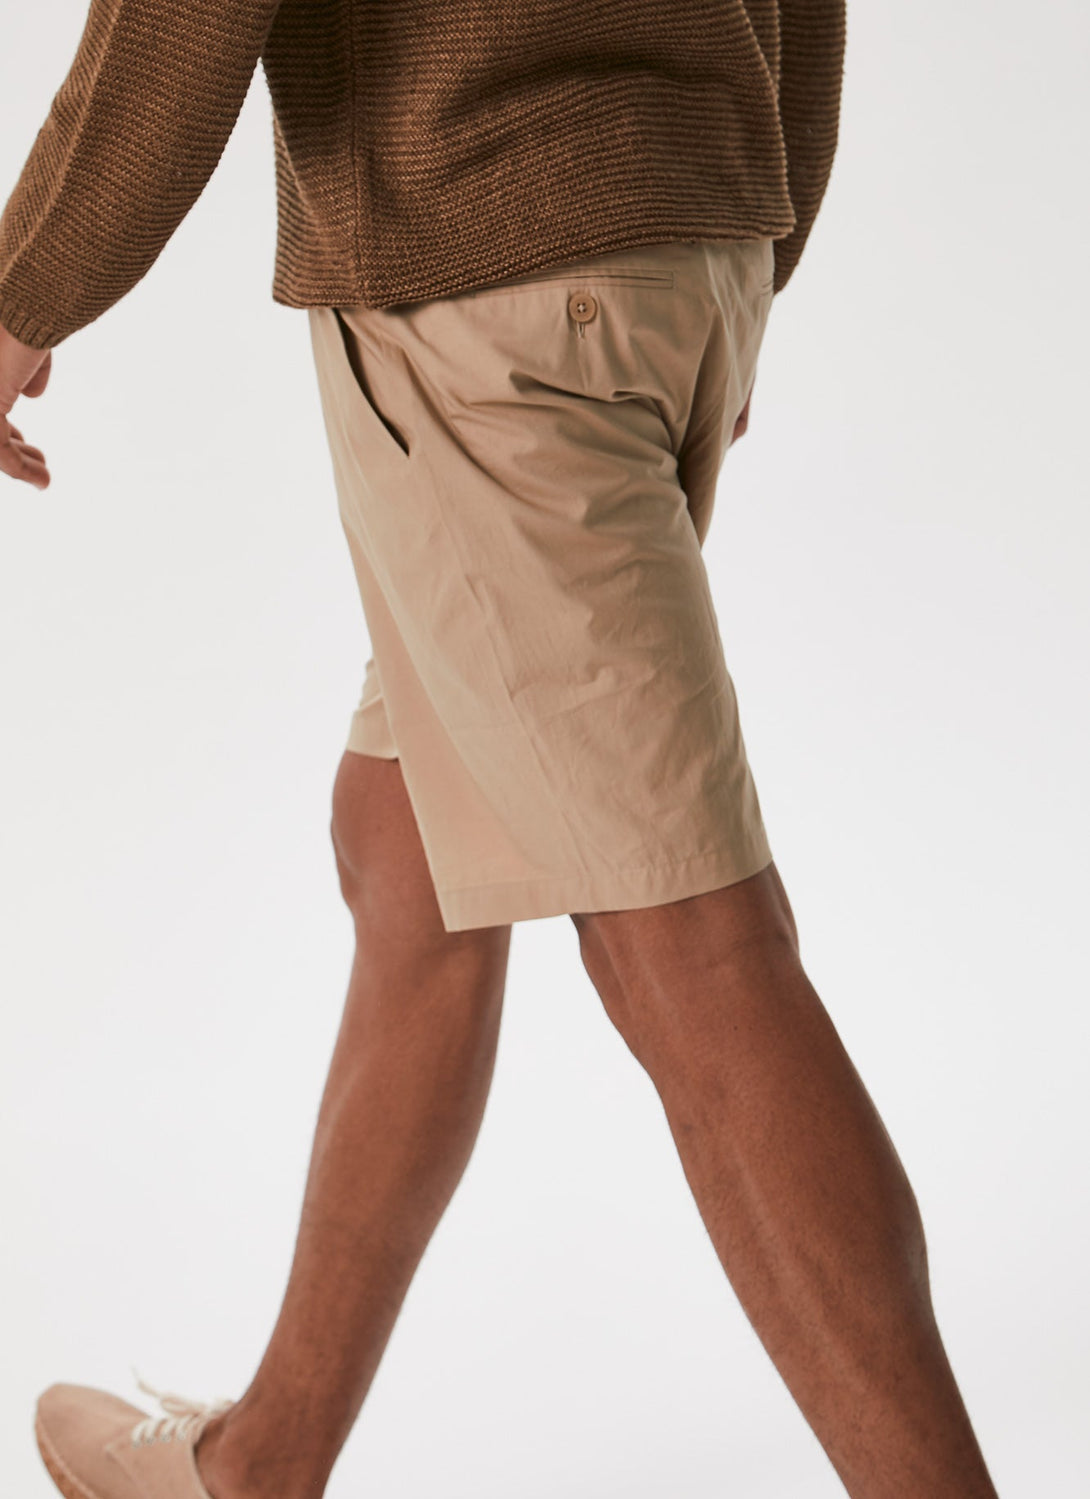 Men Shorts | Beige Short by Spanish designer Adolfo Dominguez